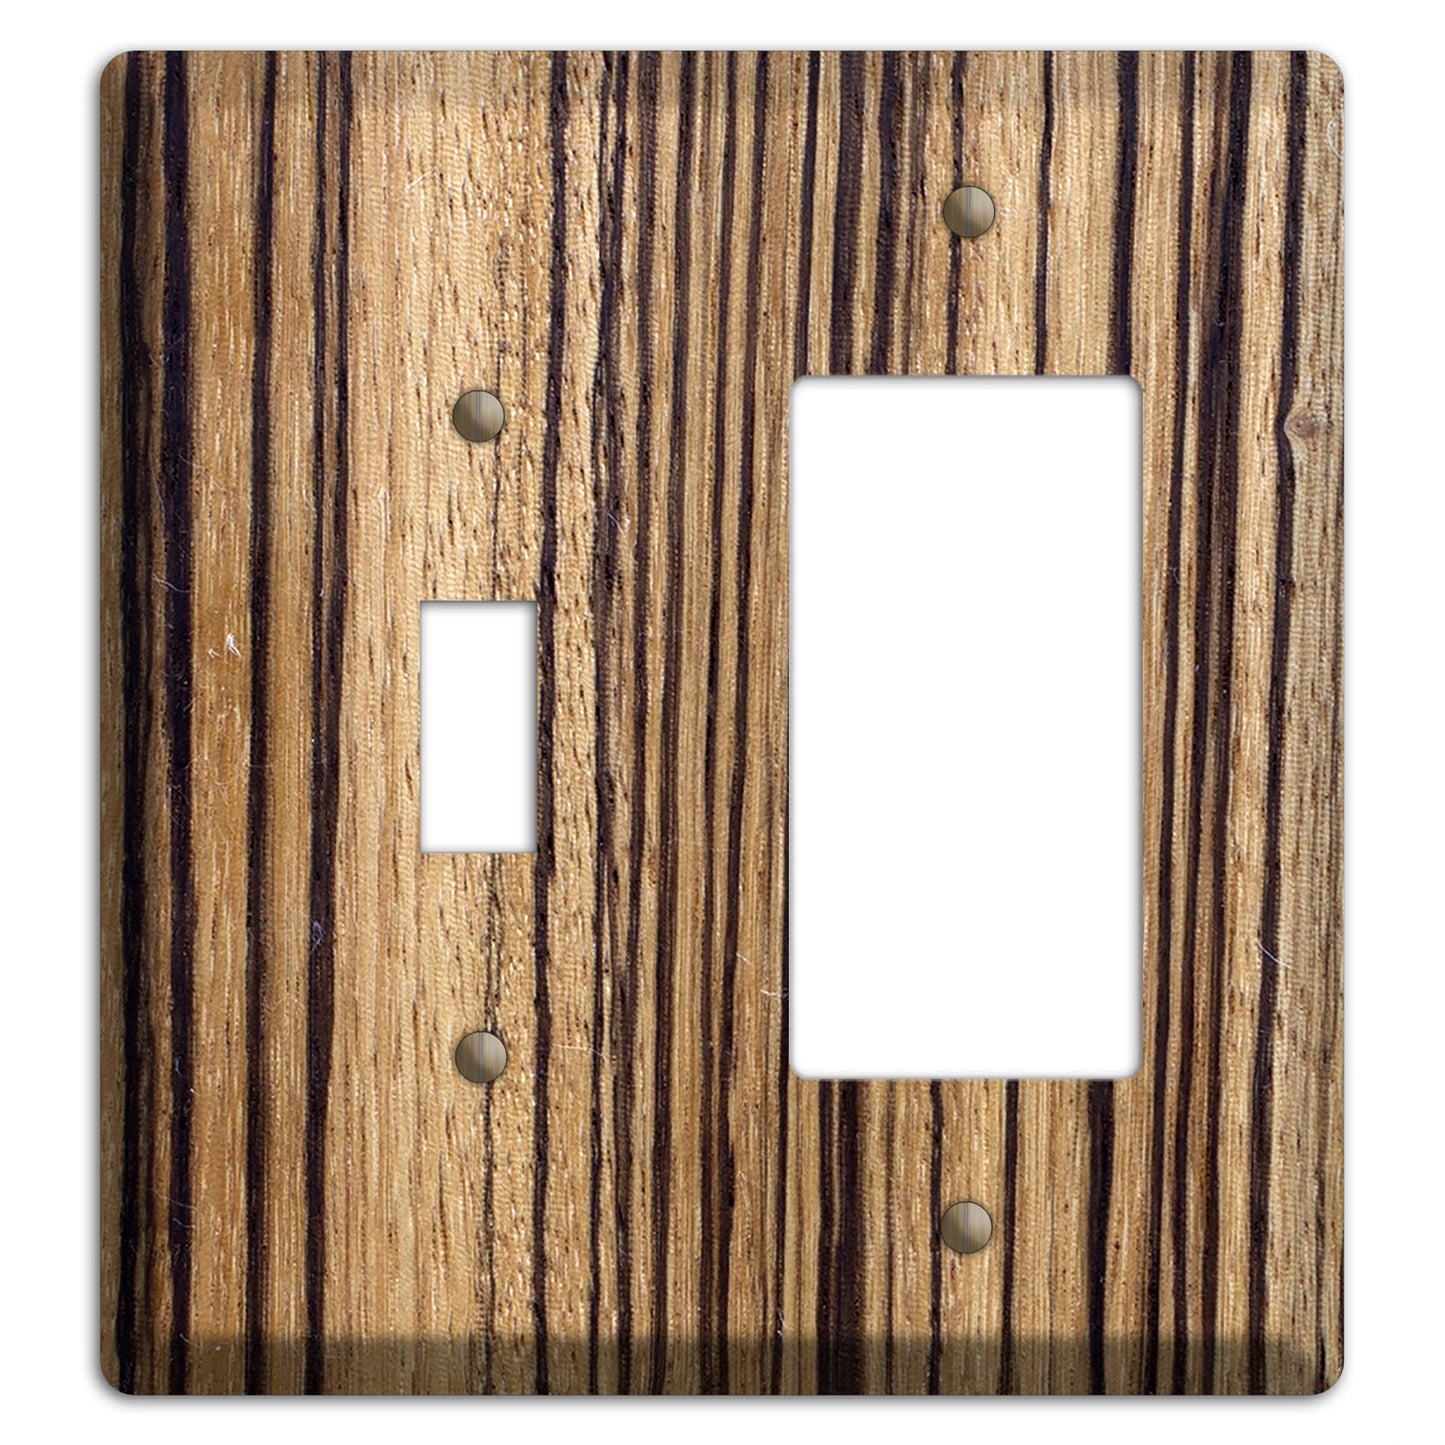 Zebrawood Wood Toggle / Rocker Cover Plate